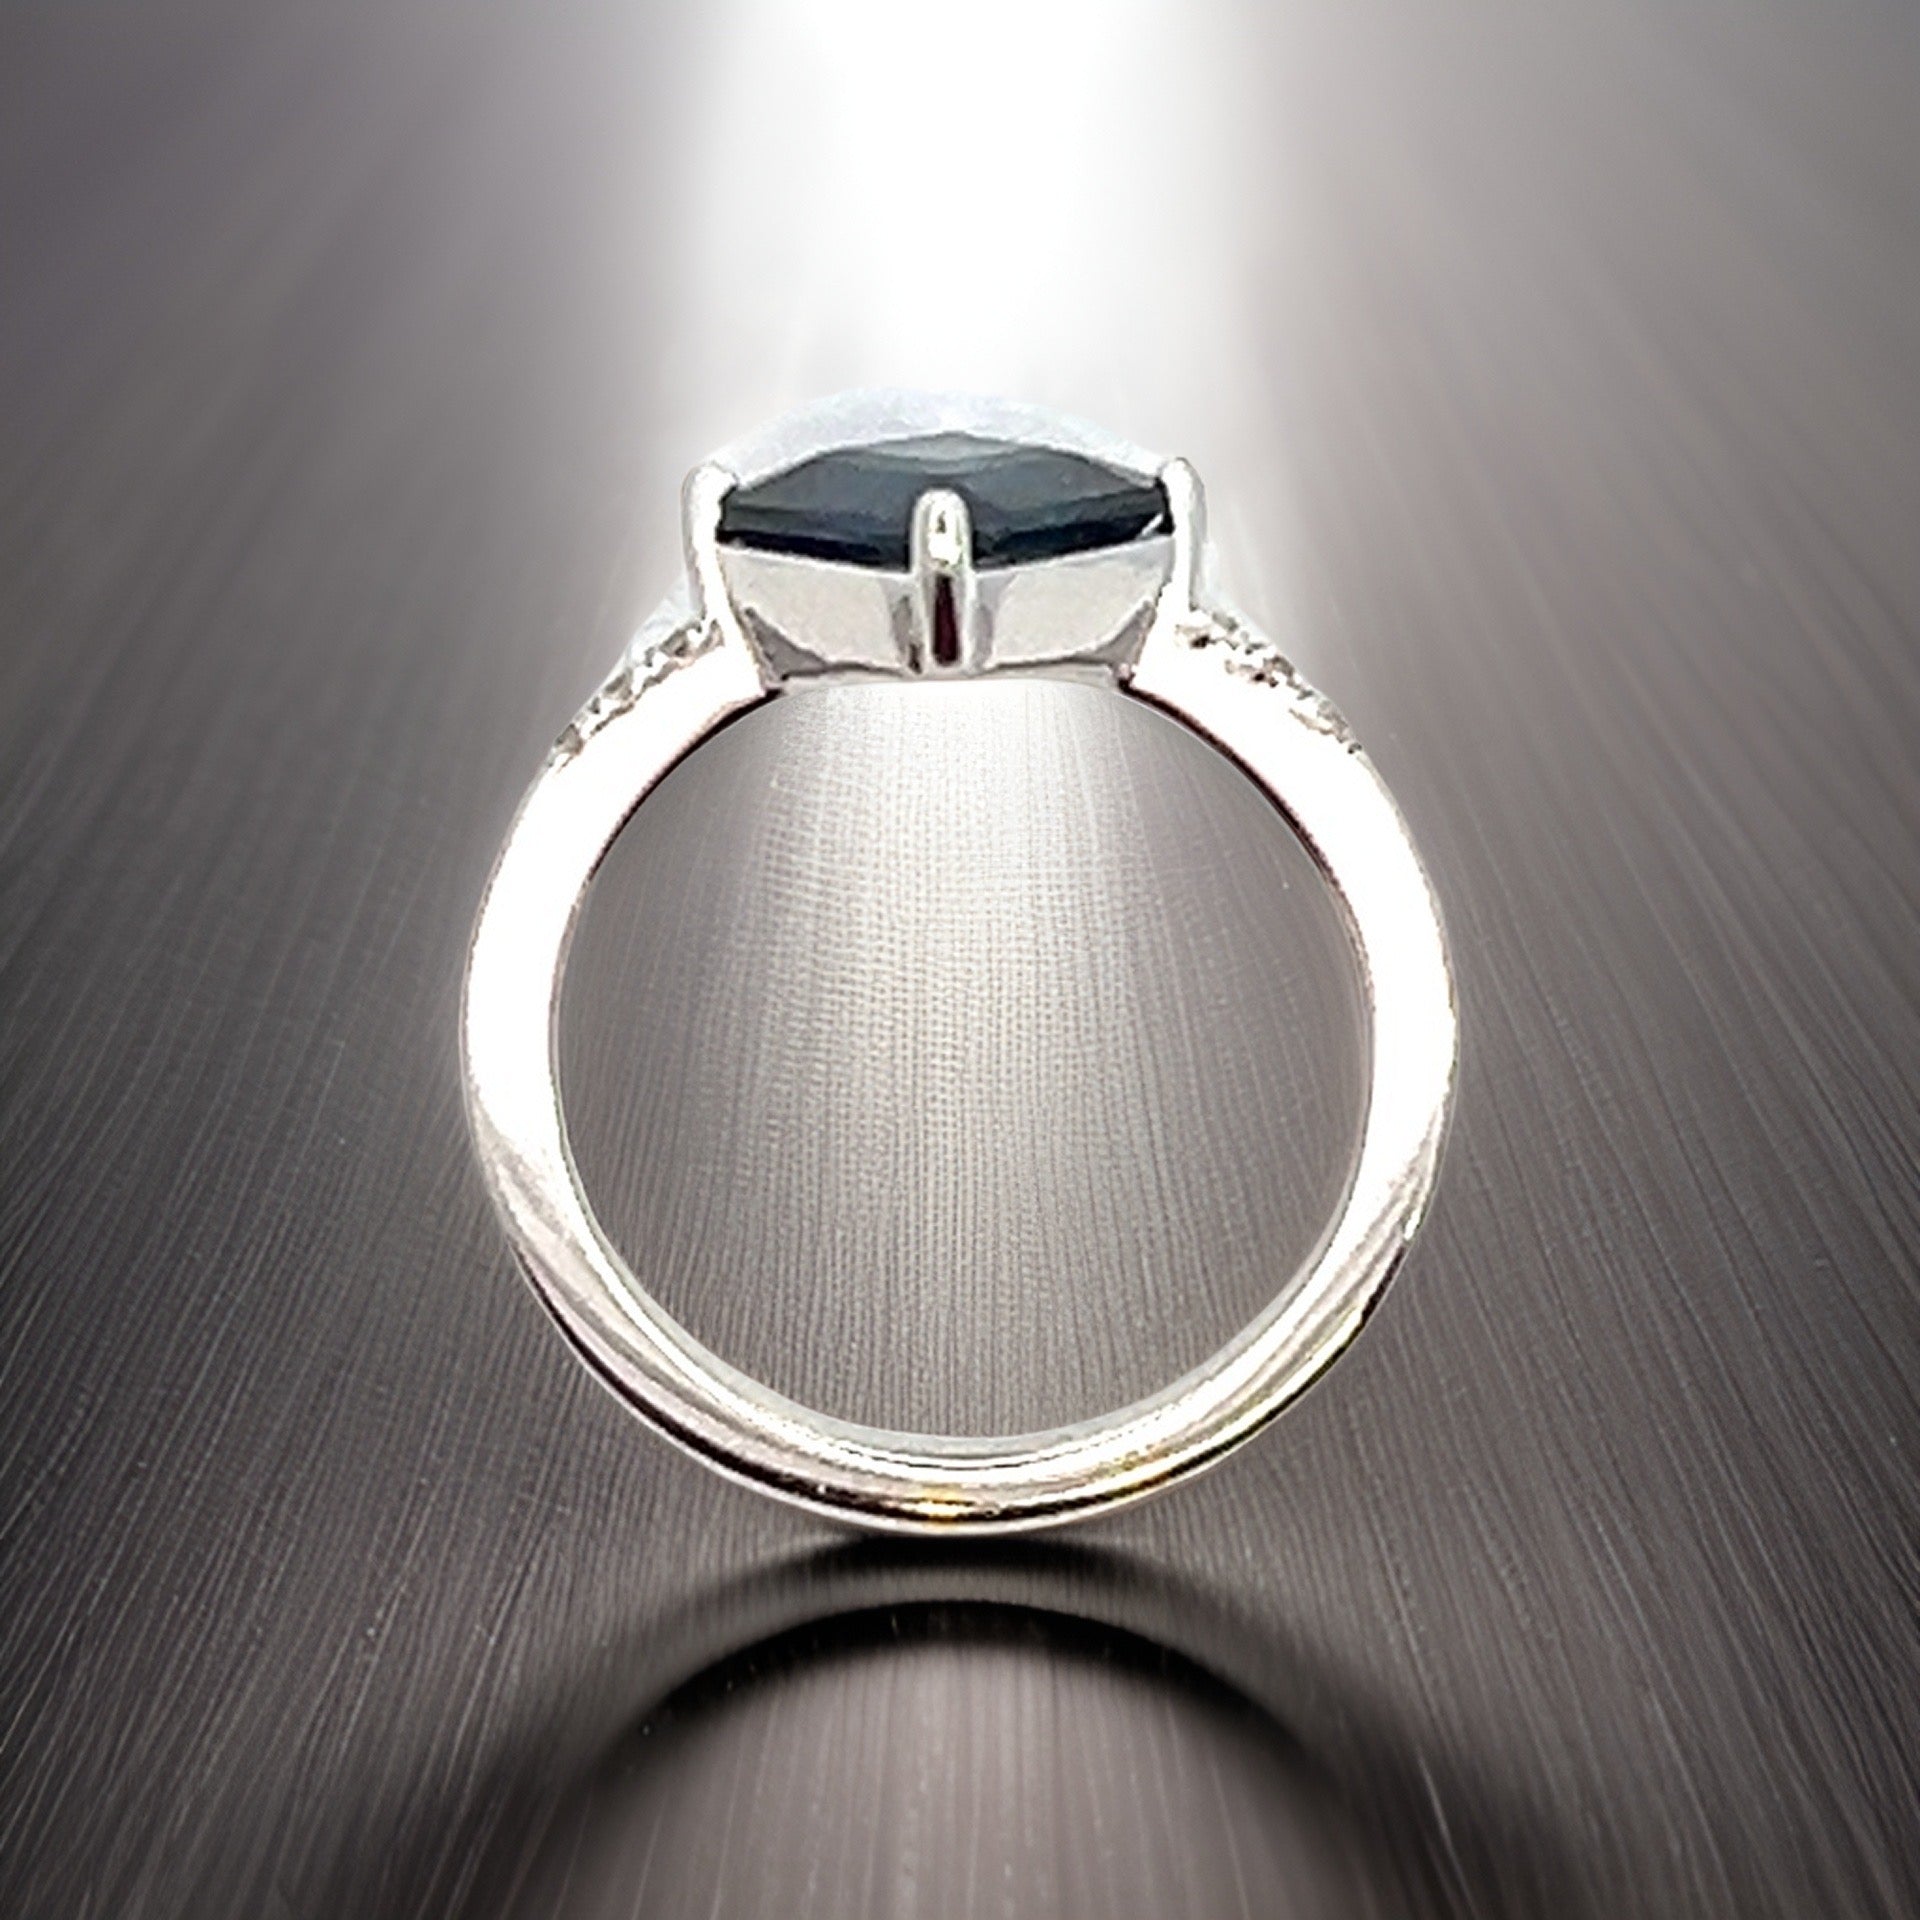 Natural Sapphire Diamond Ring 6.25 14k WG 2.24 TCW Certified $3,950 310591